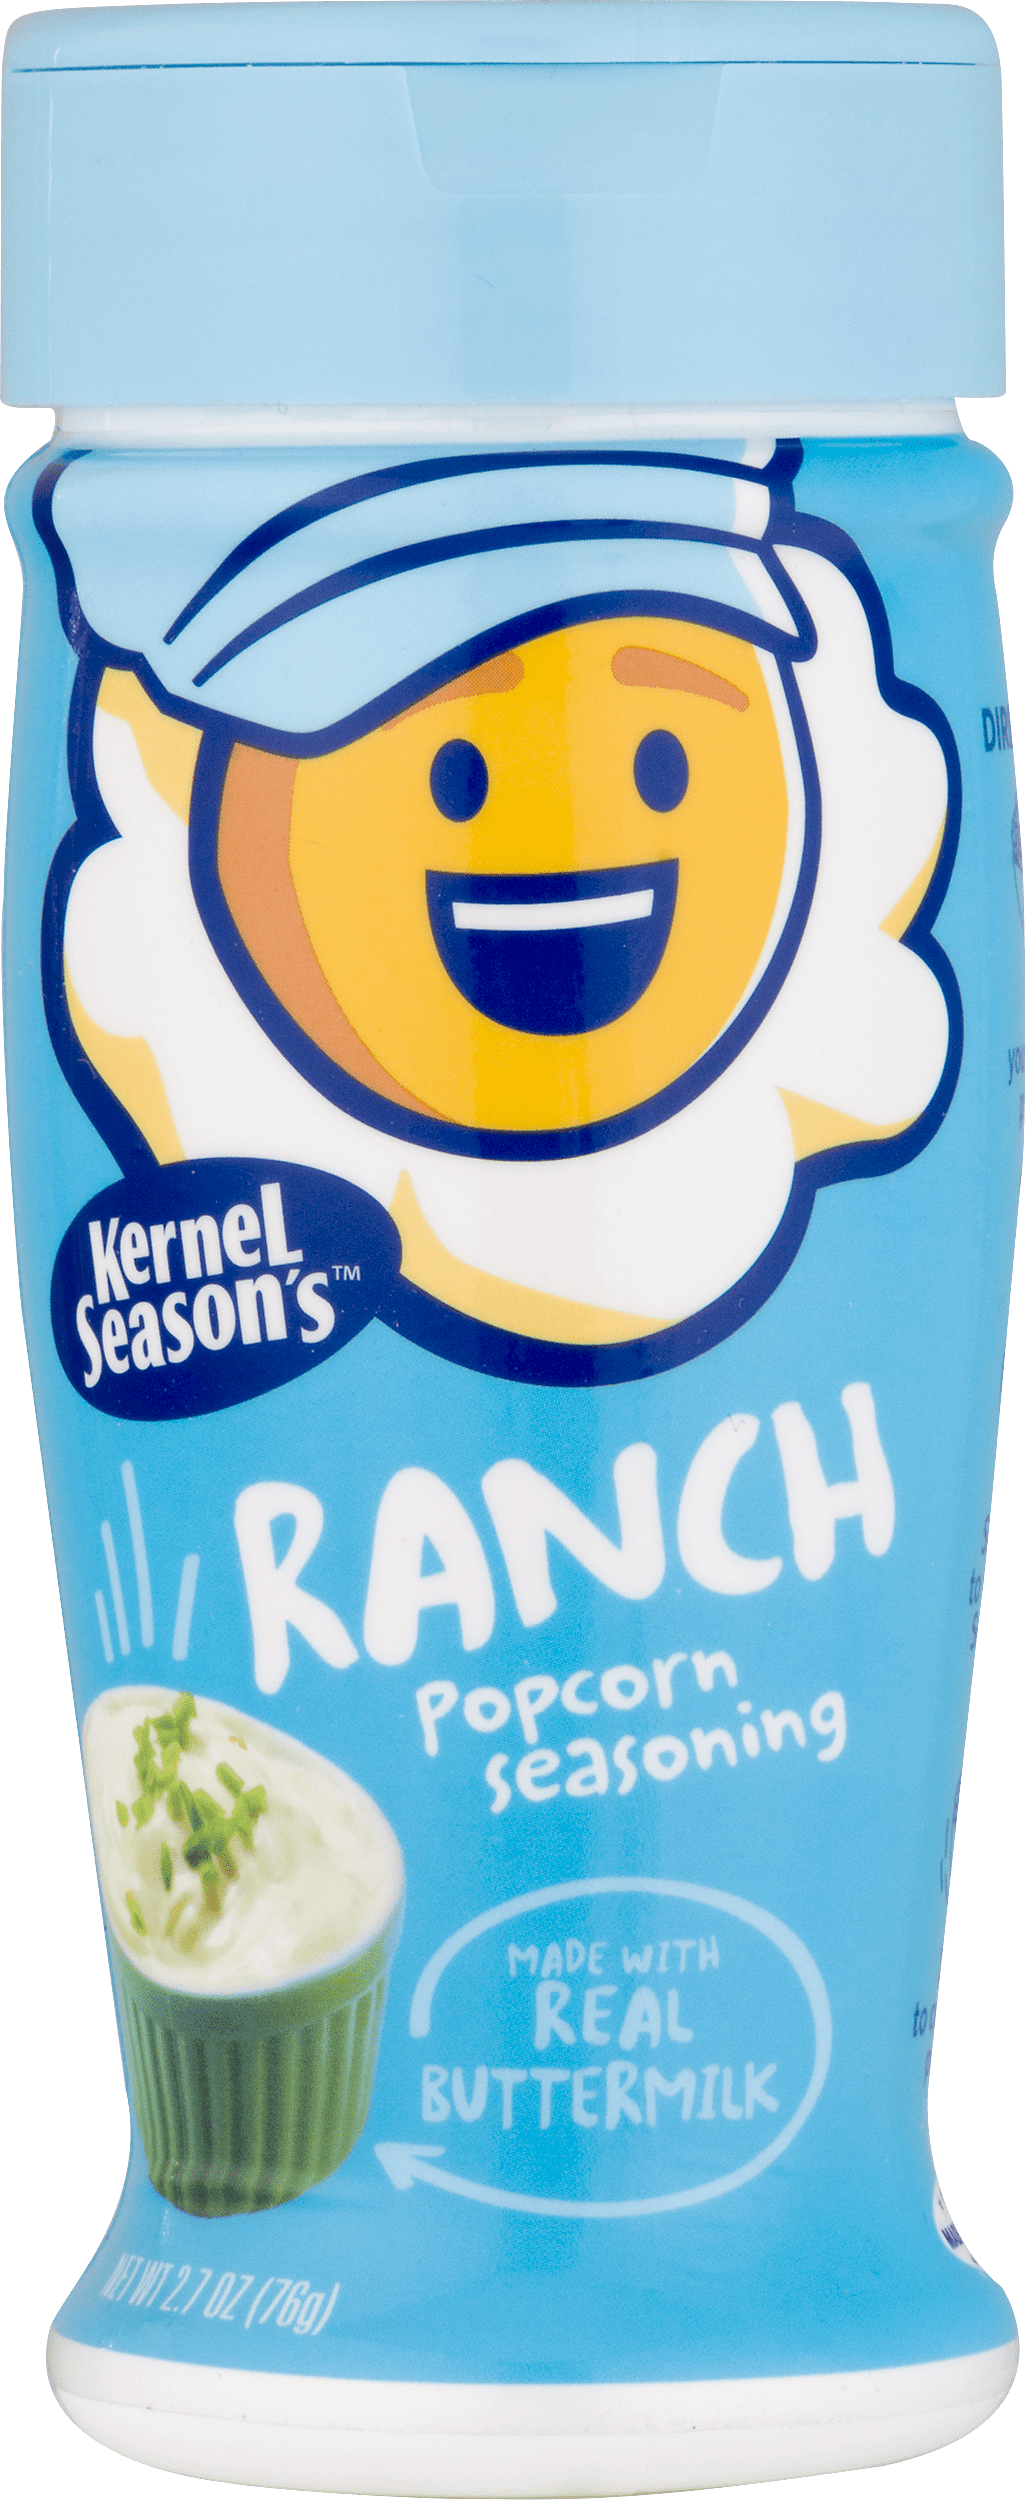 Kernel Season's Brand Ranch Flavored Popcorn Seasoning, 2.7 oz